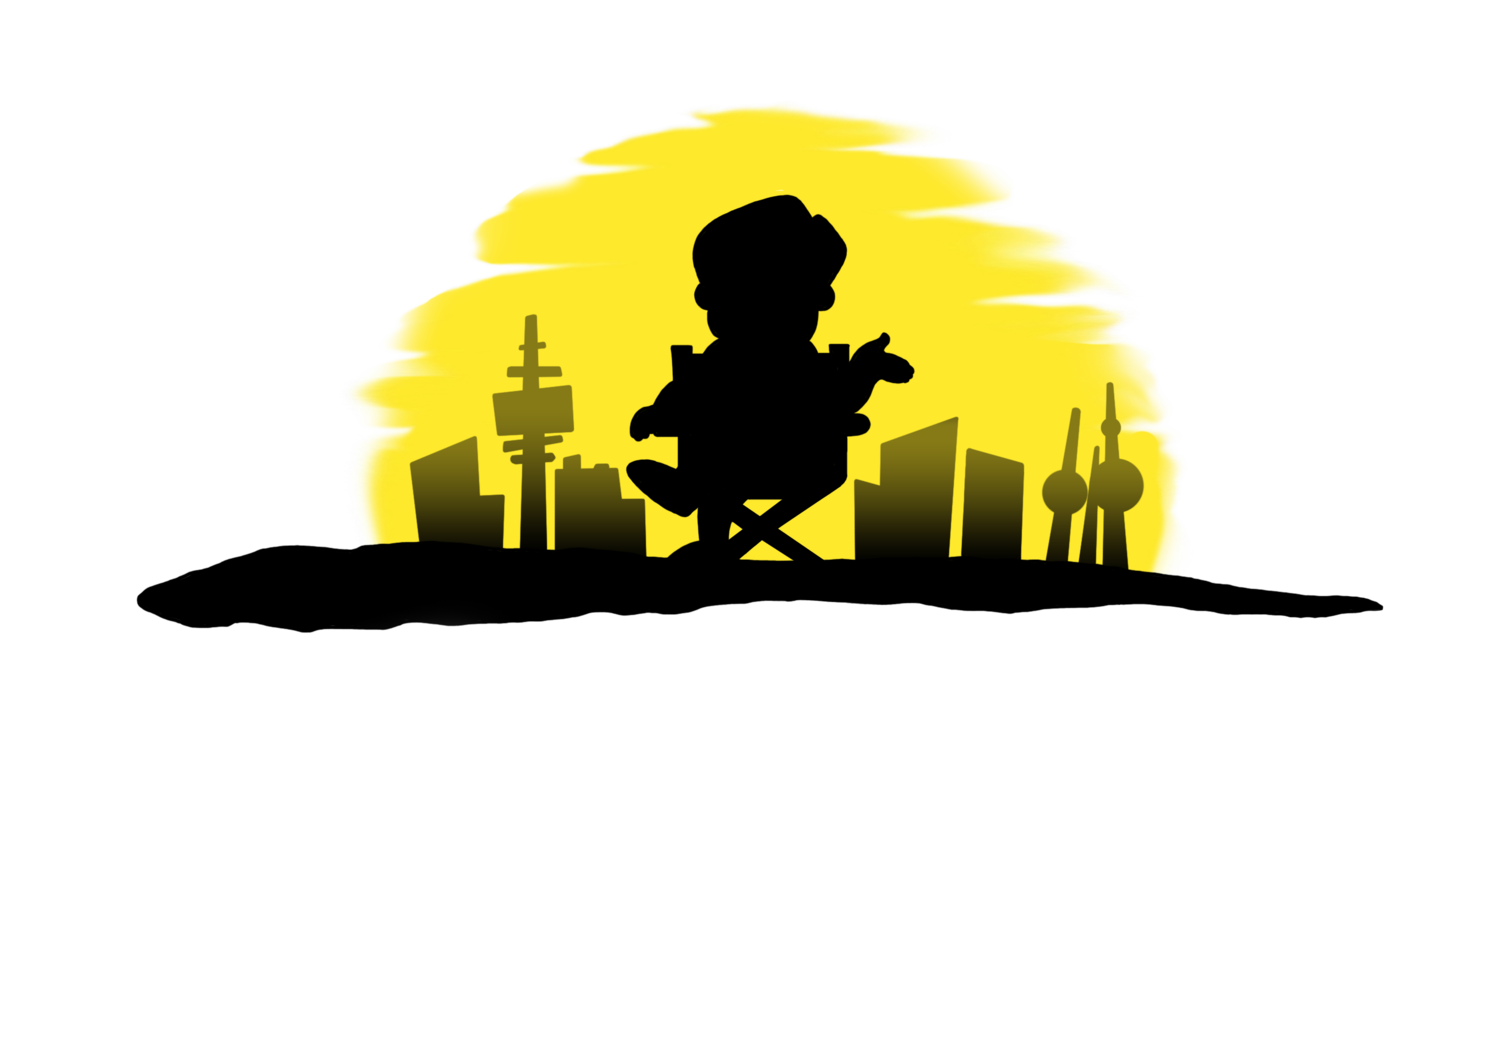 Abdalmovies Production